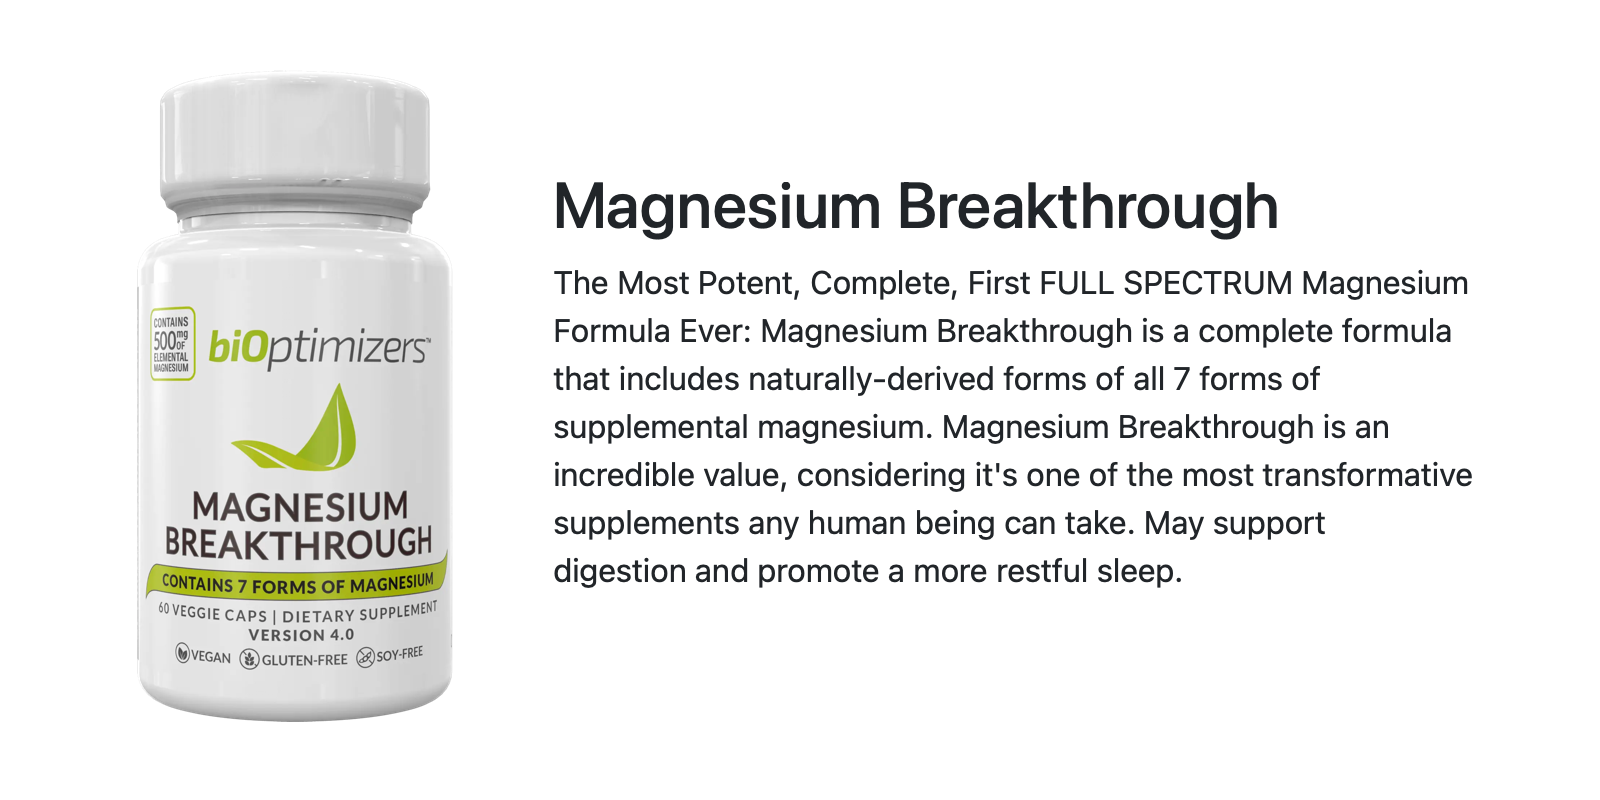 Magnesium Breakthrough Supplement Description